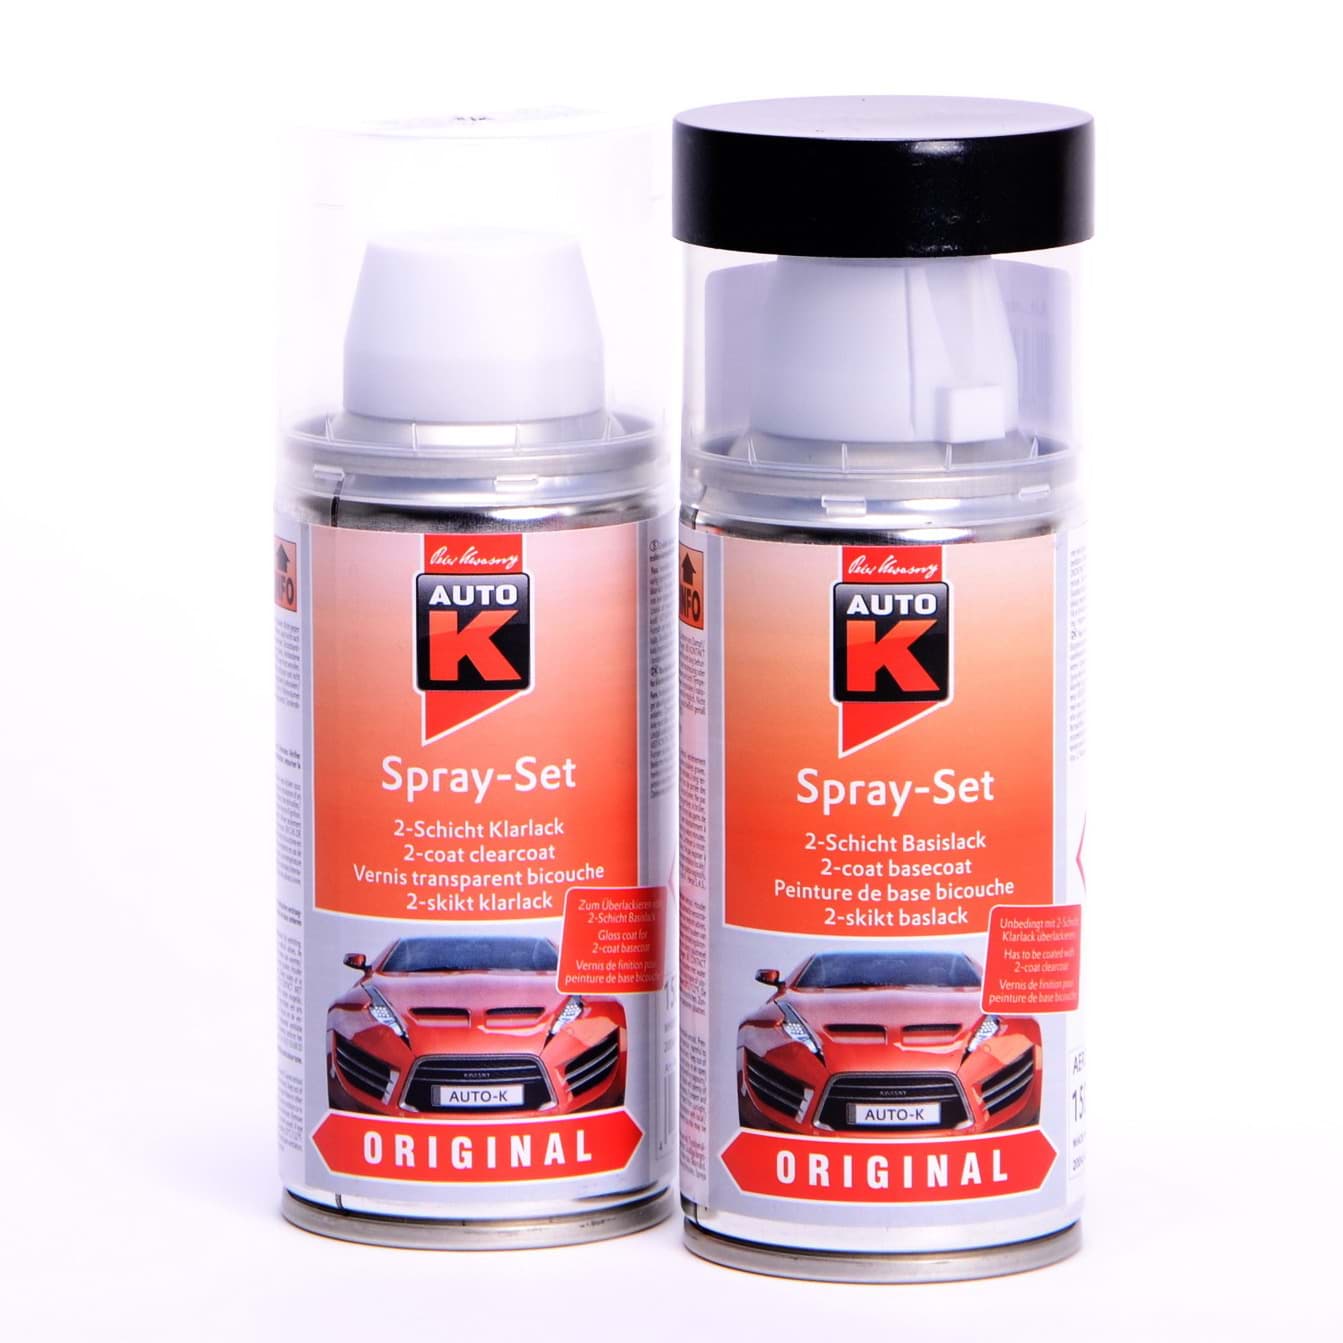 Afbeelding van Auto-K Spray-Set Autolack für Volkswagen, VW, Audi LD5D Chagallblau 20777